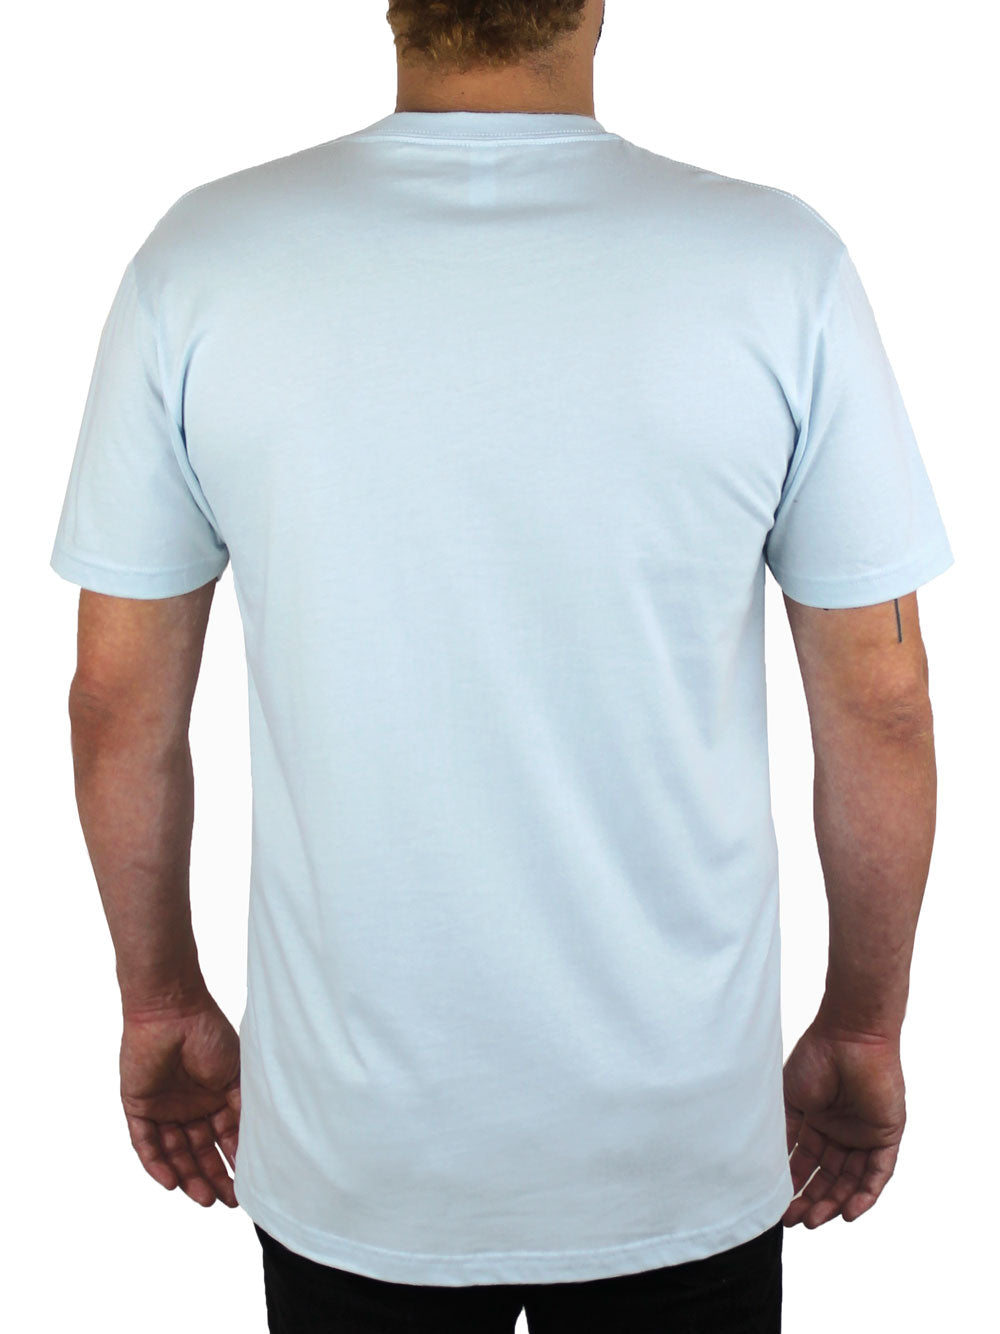 Real - Chris Found Genius Item Shirts Surf Nicaragua - Shirts – T-Shirt Clothing Knight